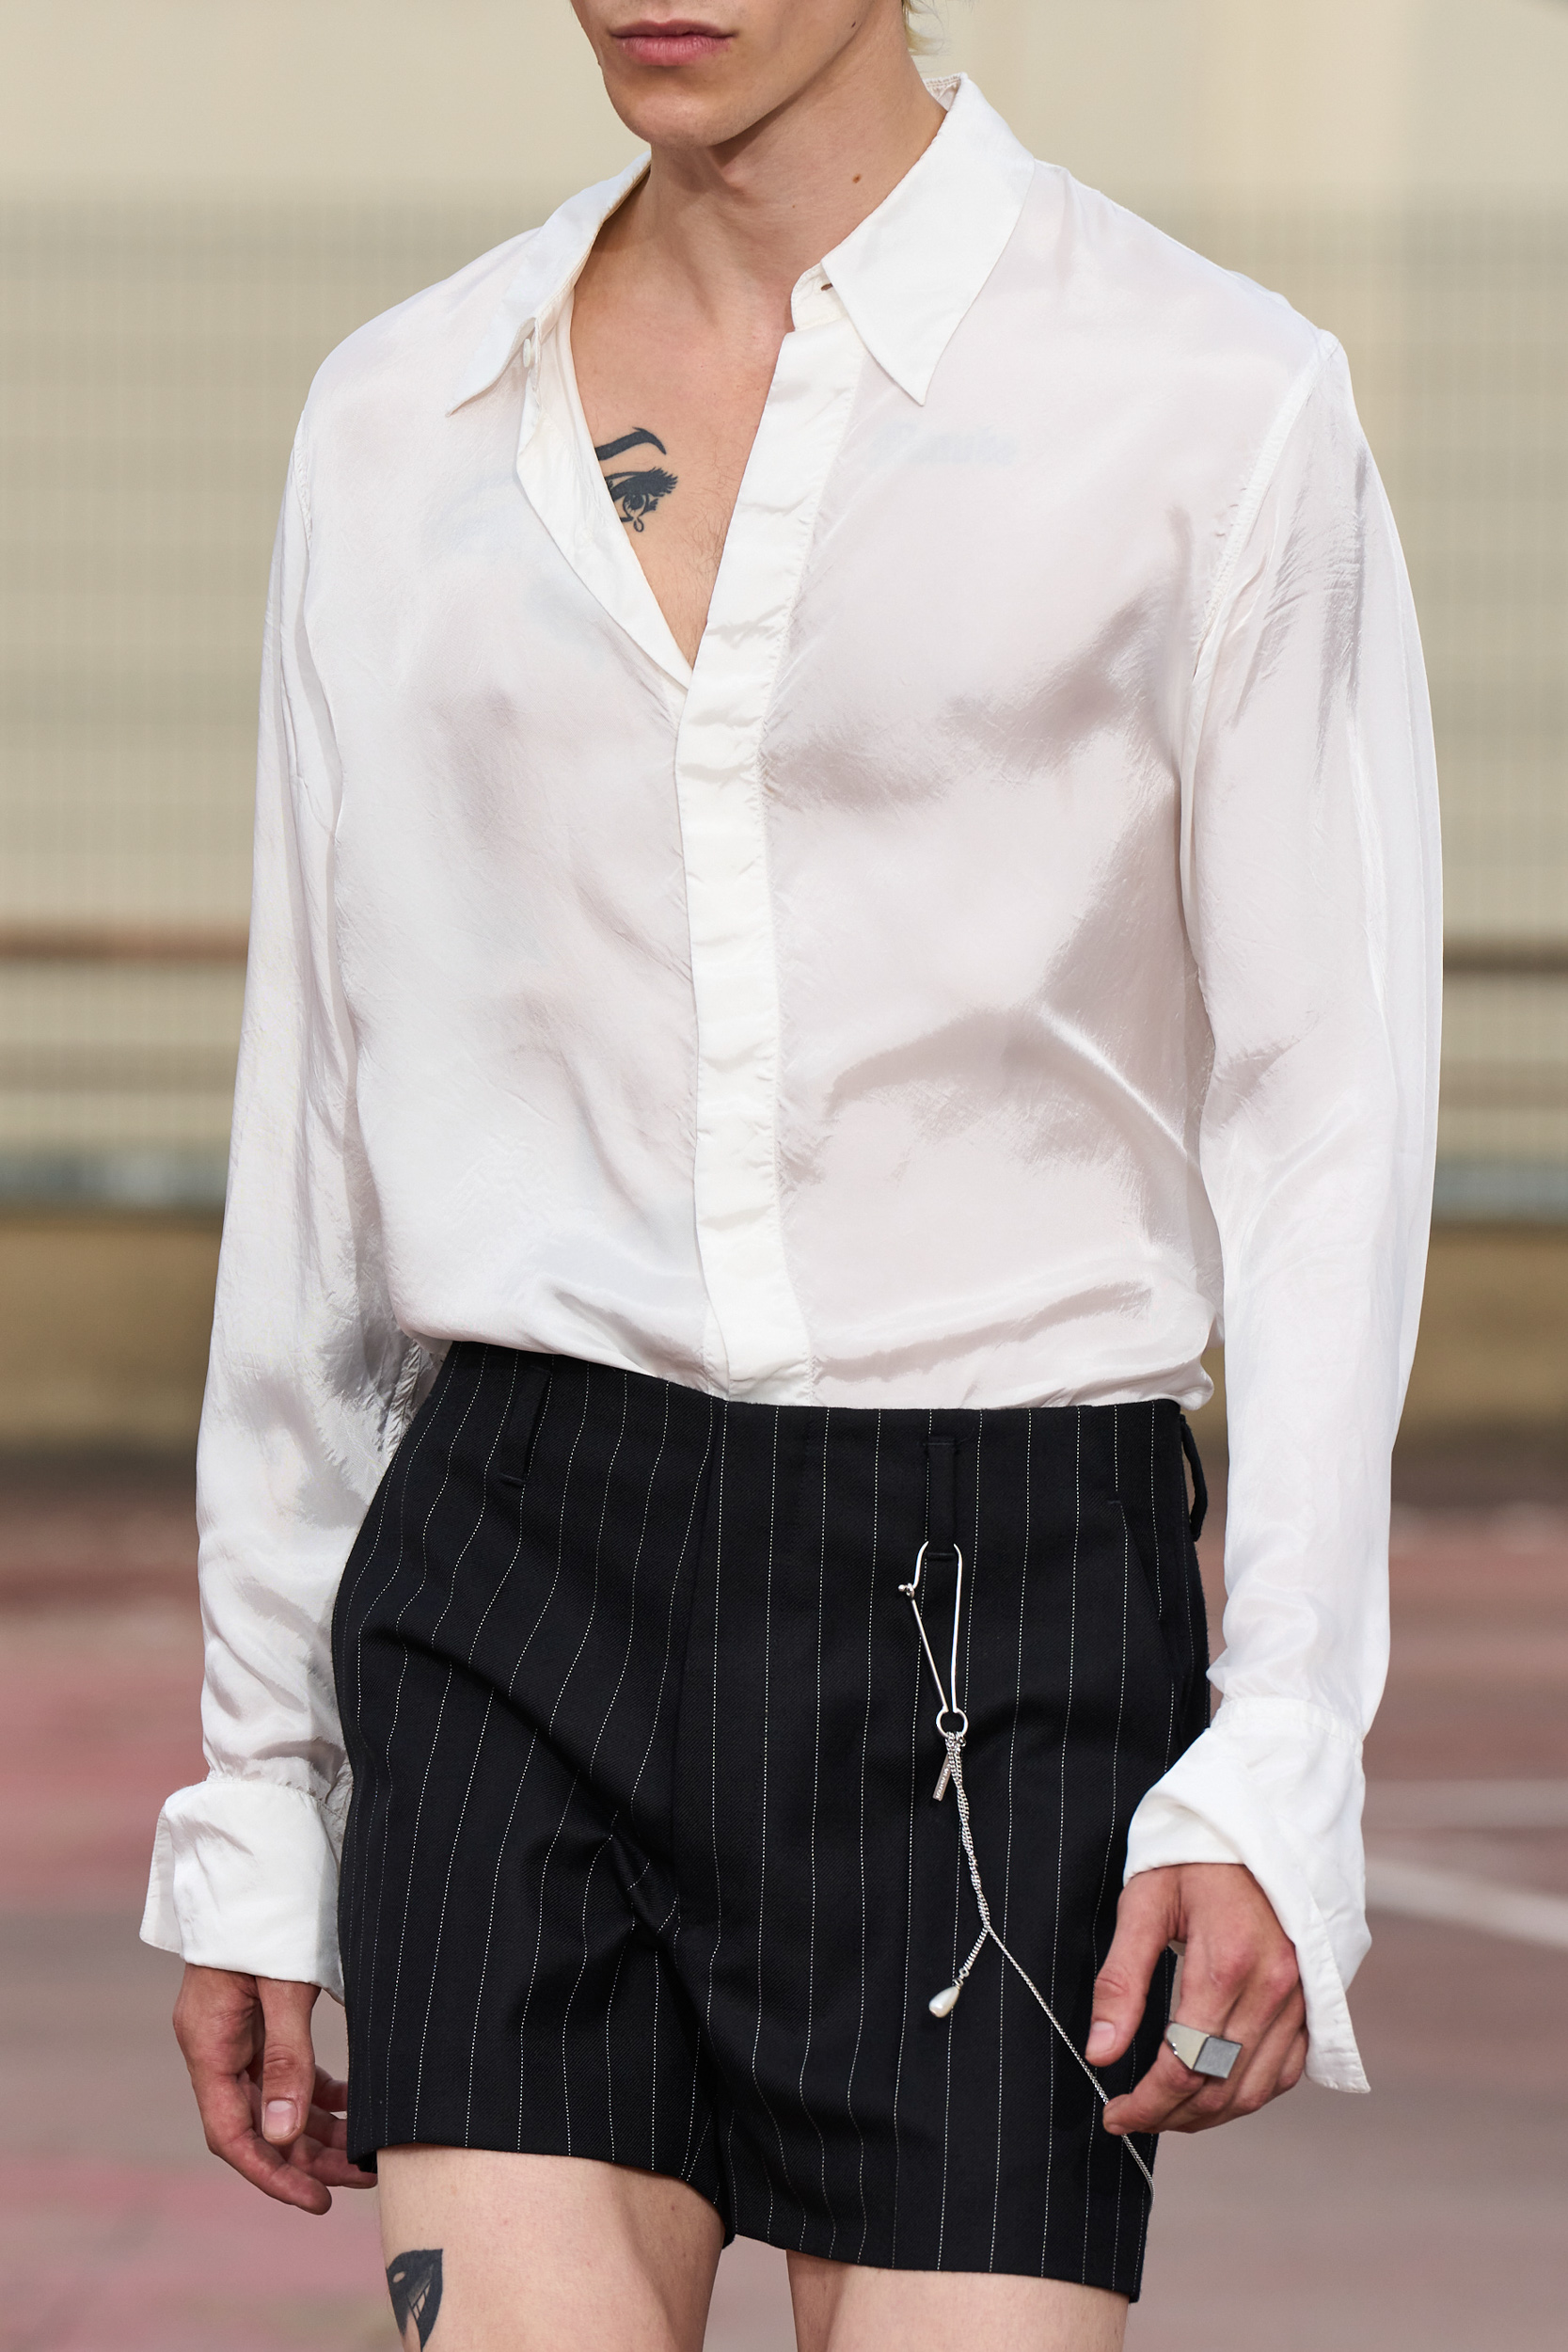 Dries Van Noten Spring 2023 Men's Fashion Show Details Fashion Show ...